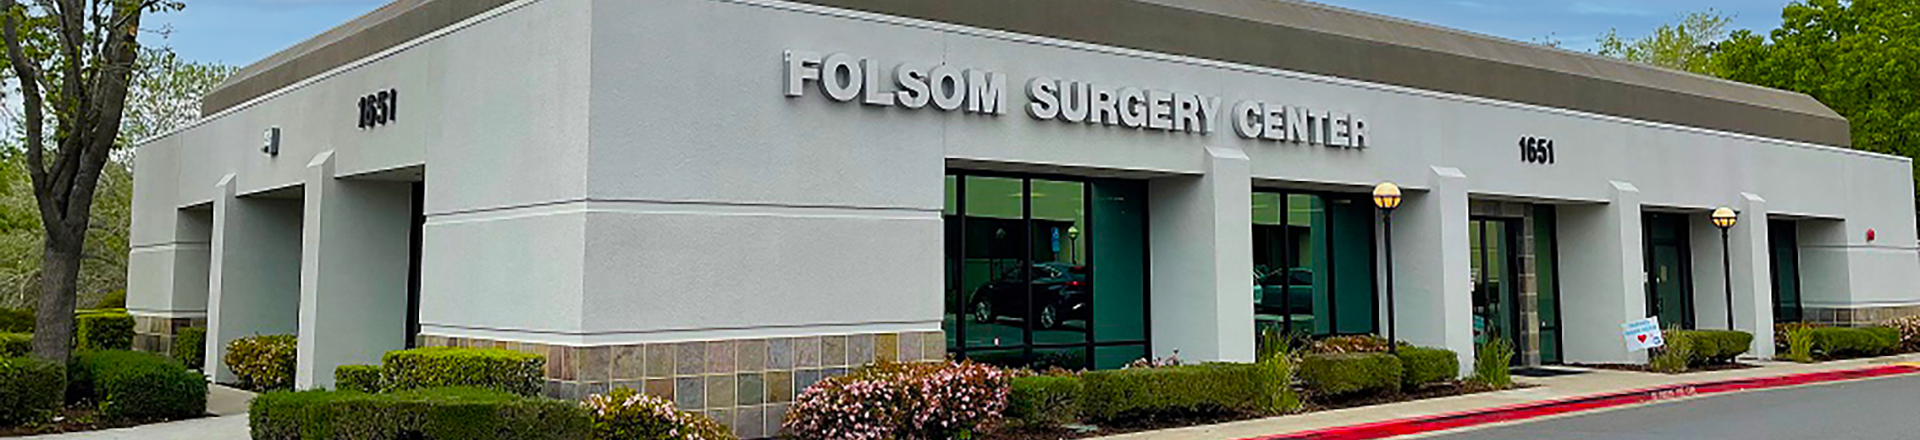 Folsom Surgery Center